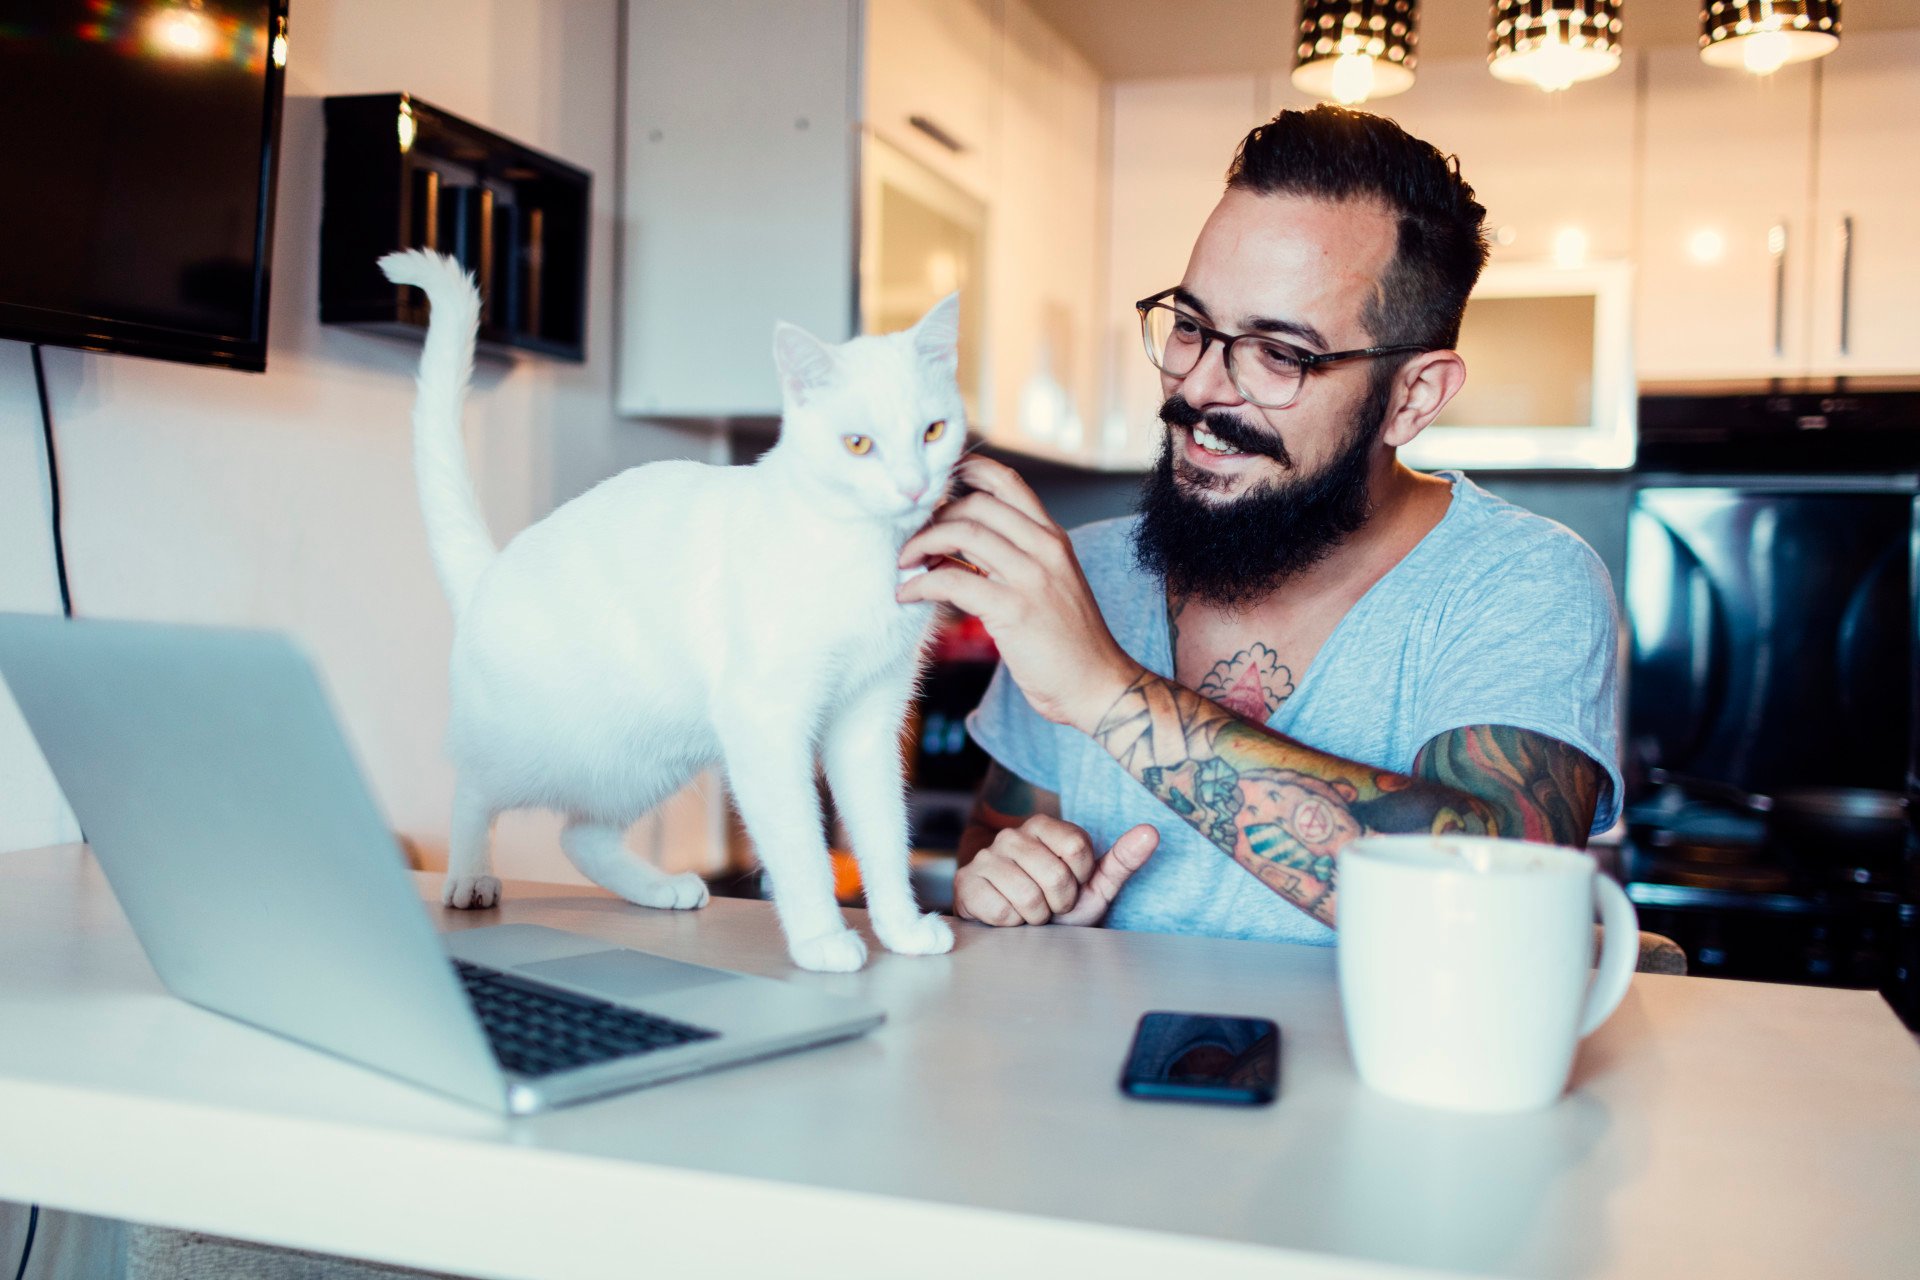 work-at-home-cat-man-laptop-kitchen-phone